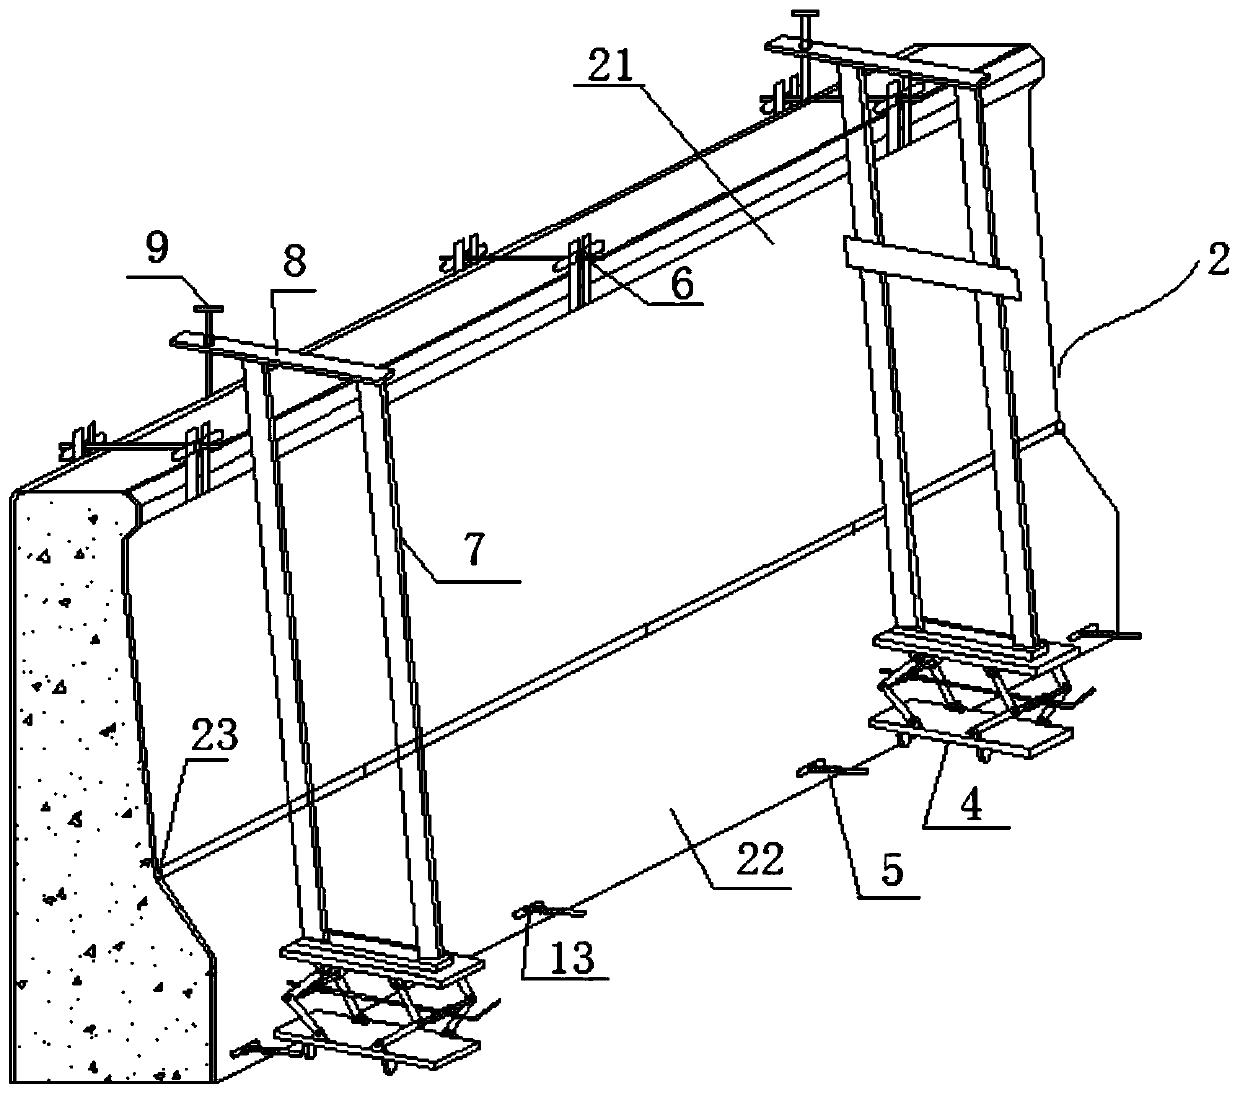 Bridge cast-in-place concrete anti-collision guardrail formwork construction device and construction method